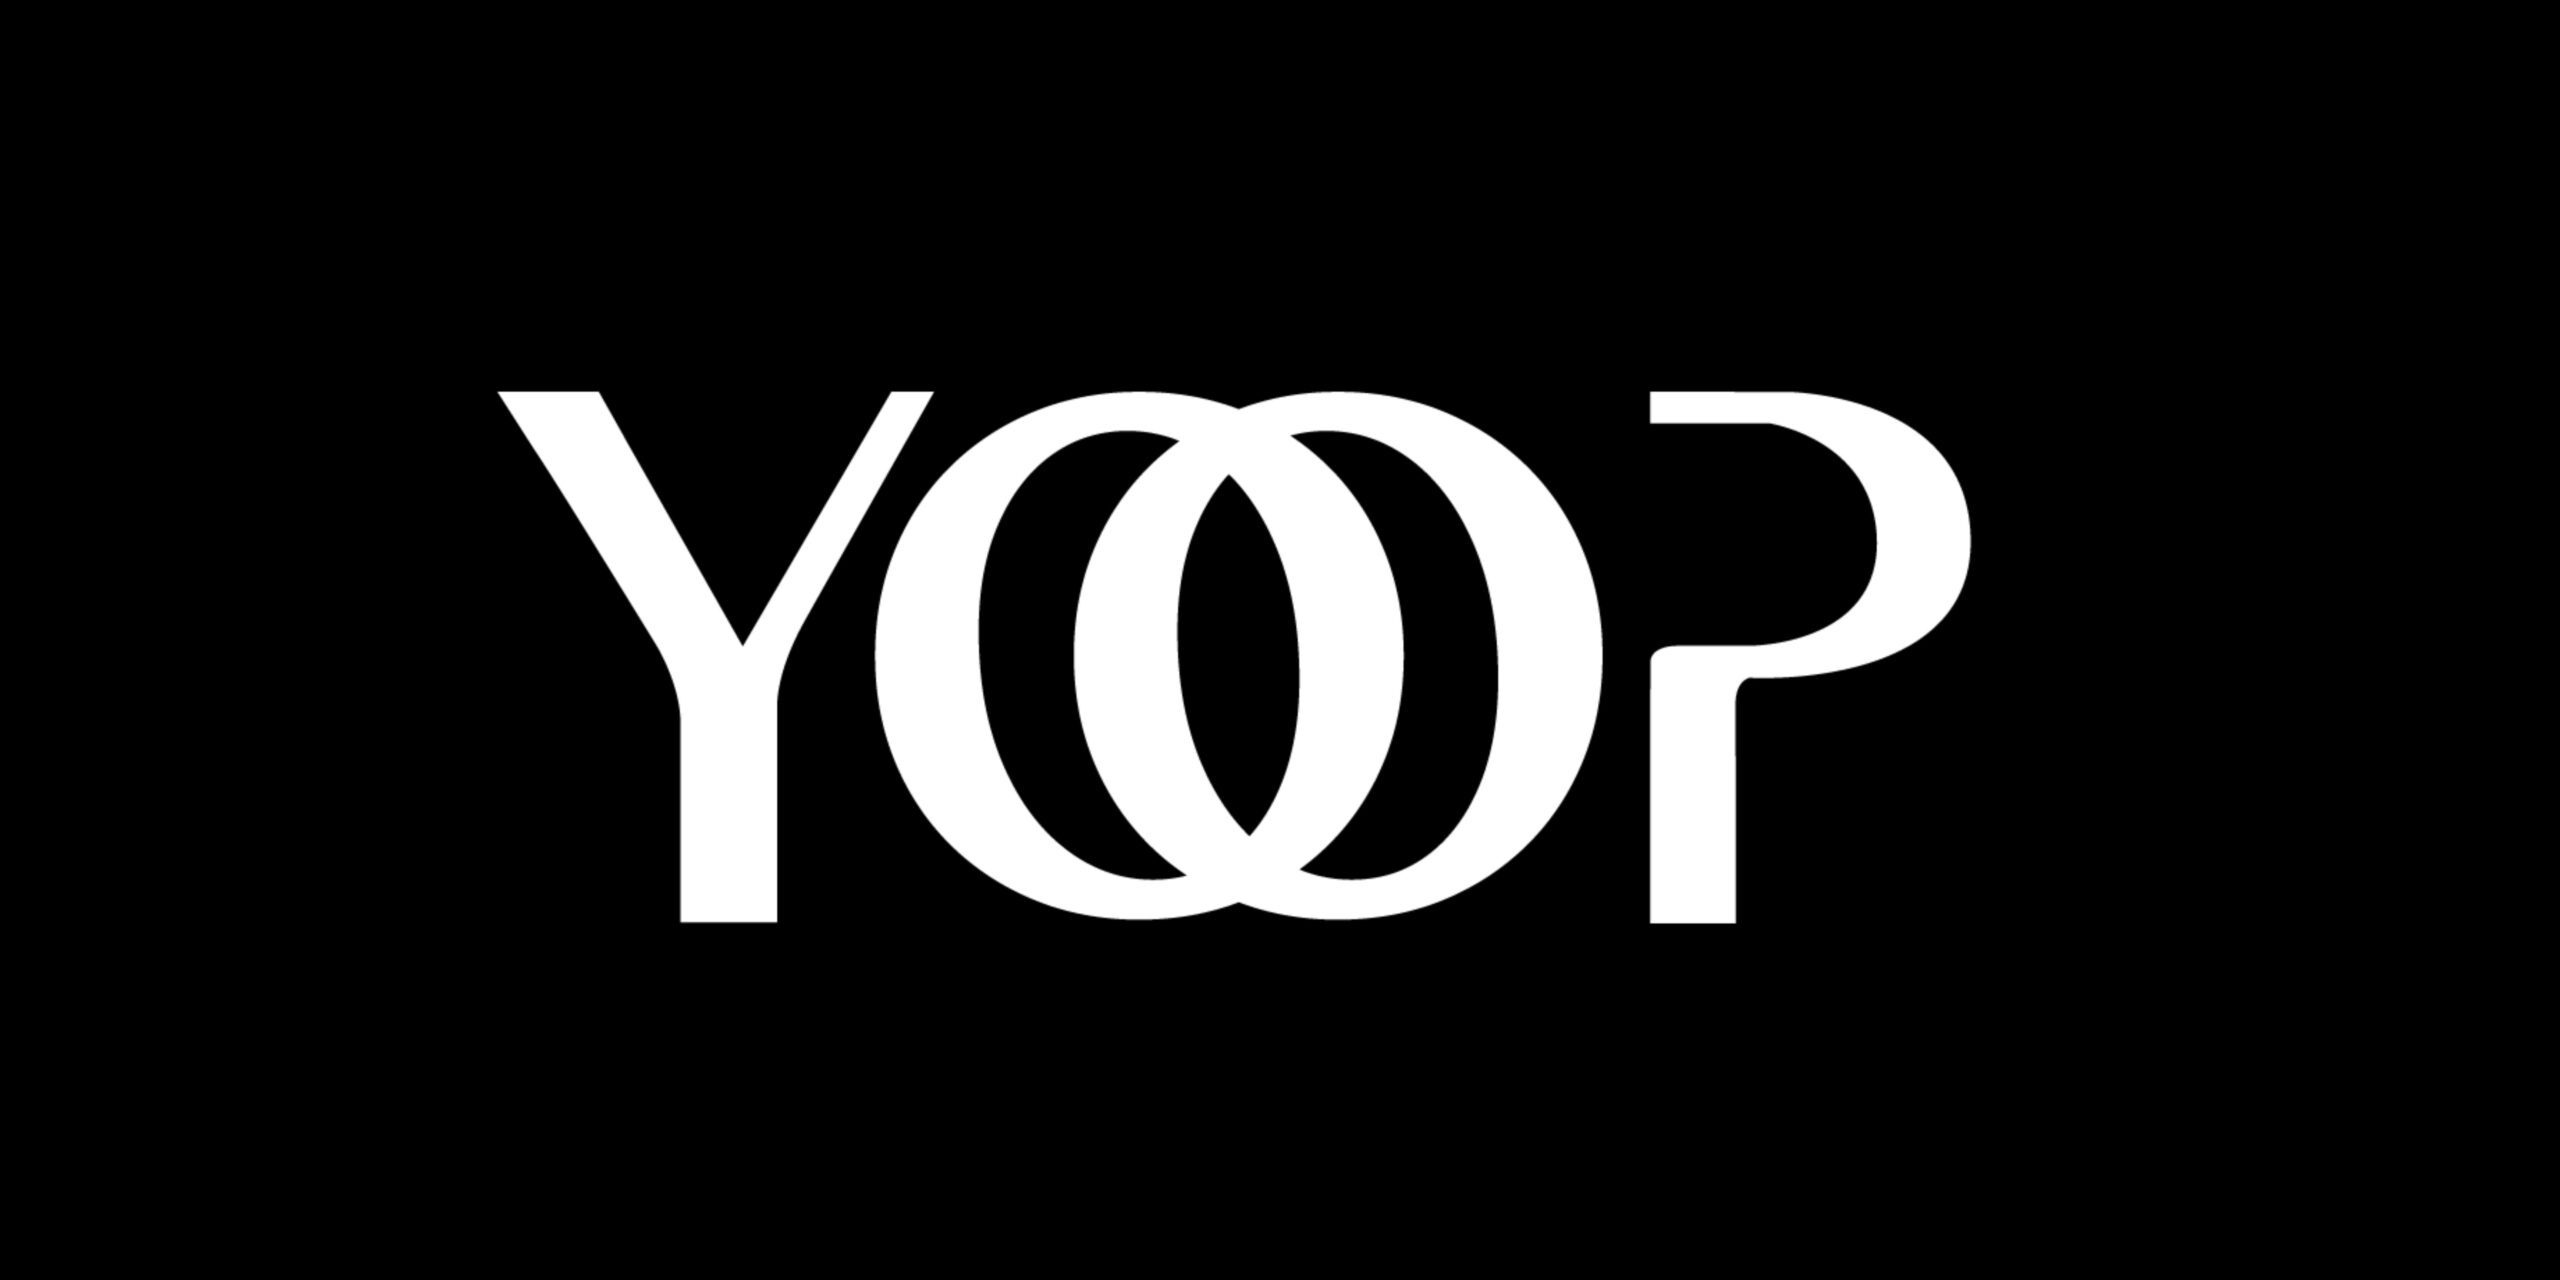 Logo-ul YOOP pe fundal negru